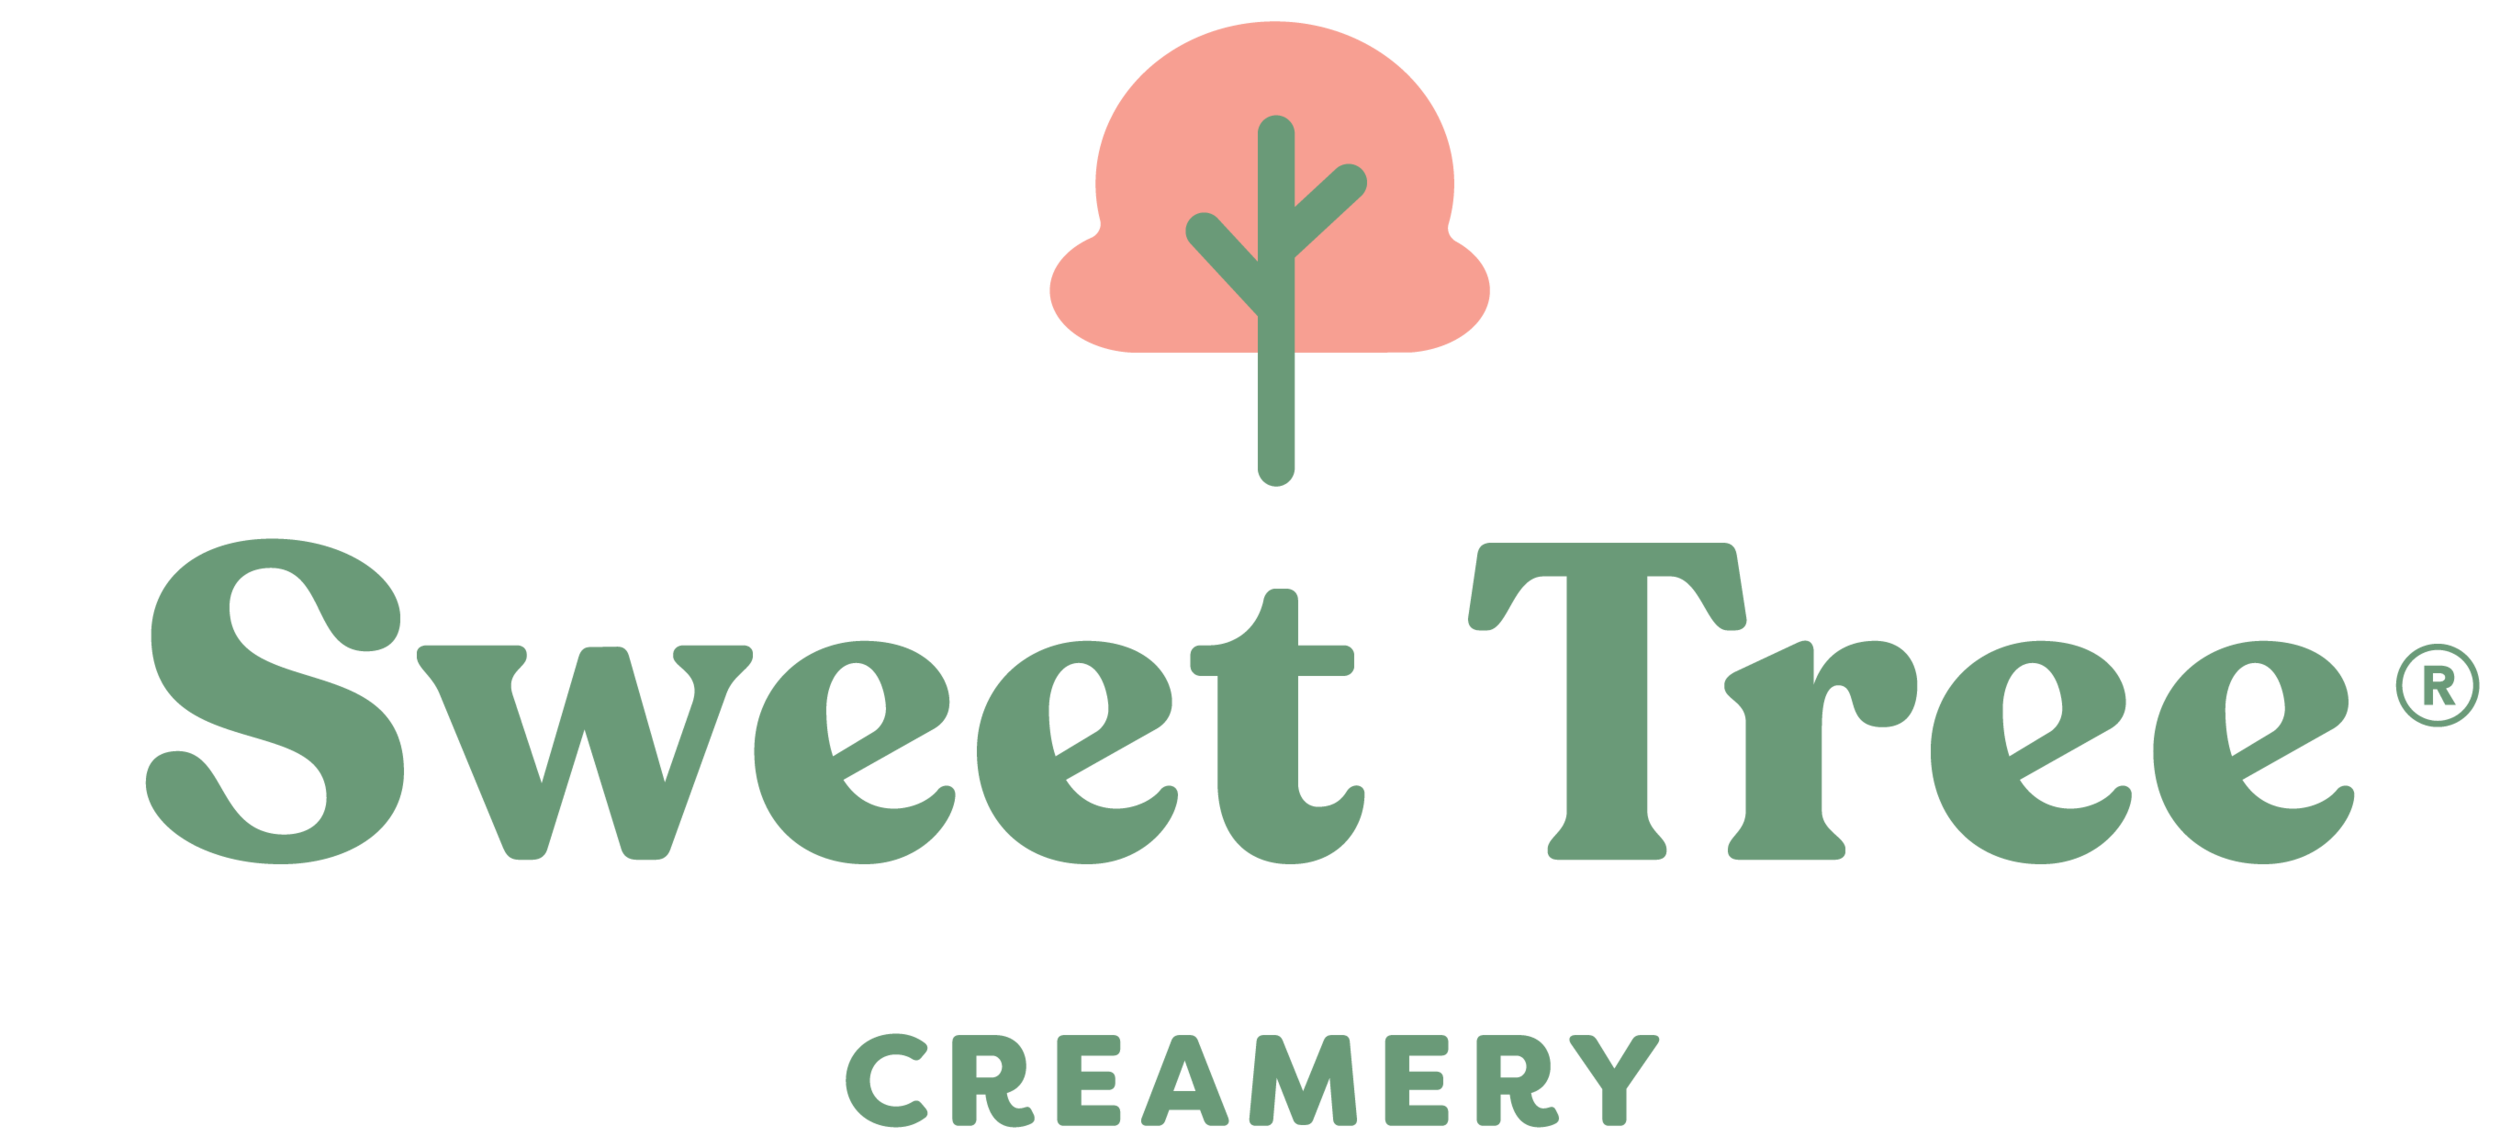 Sweet Tree Creamery